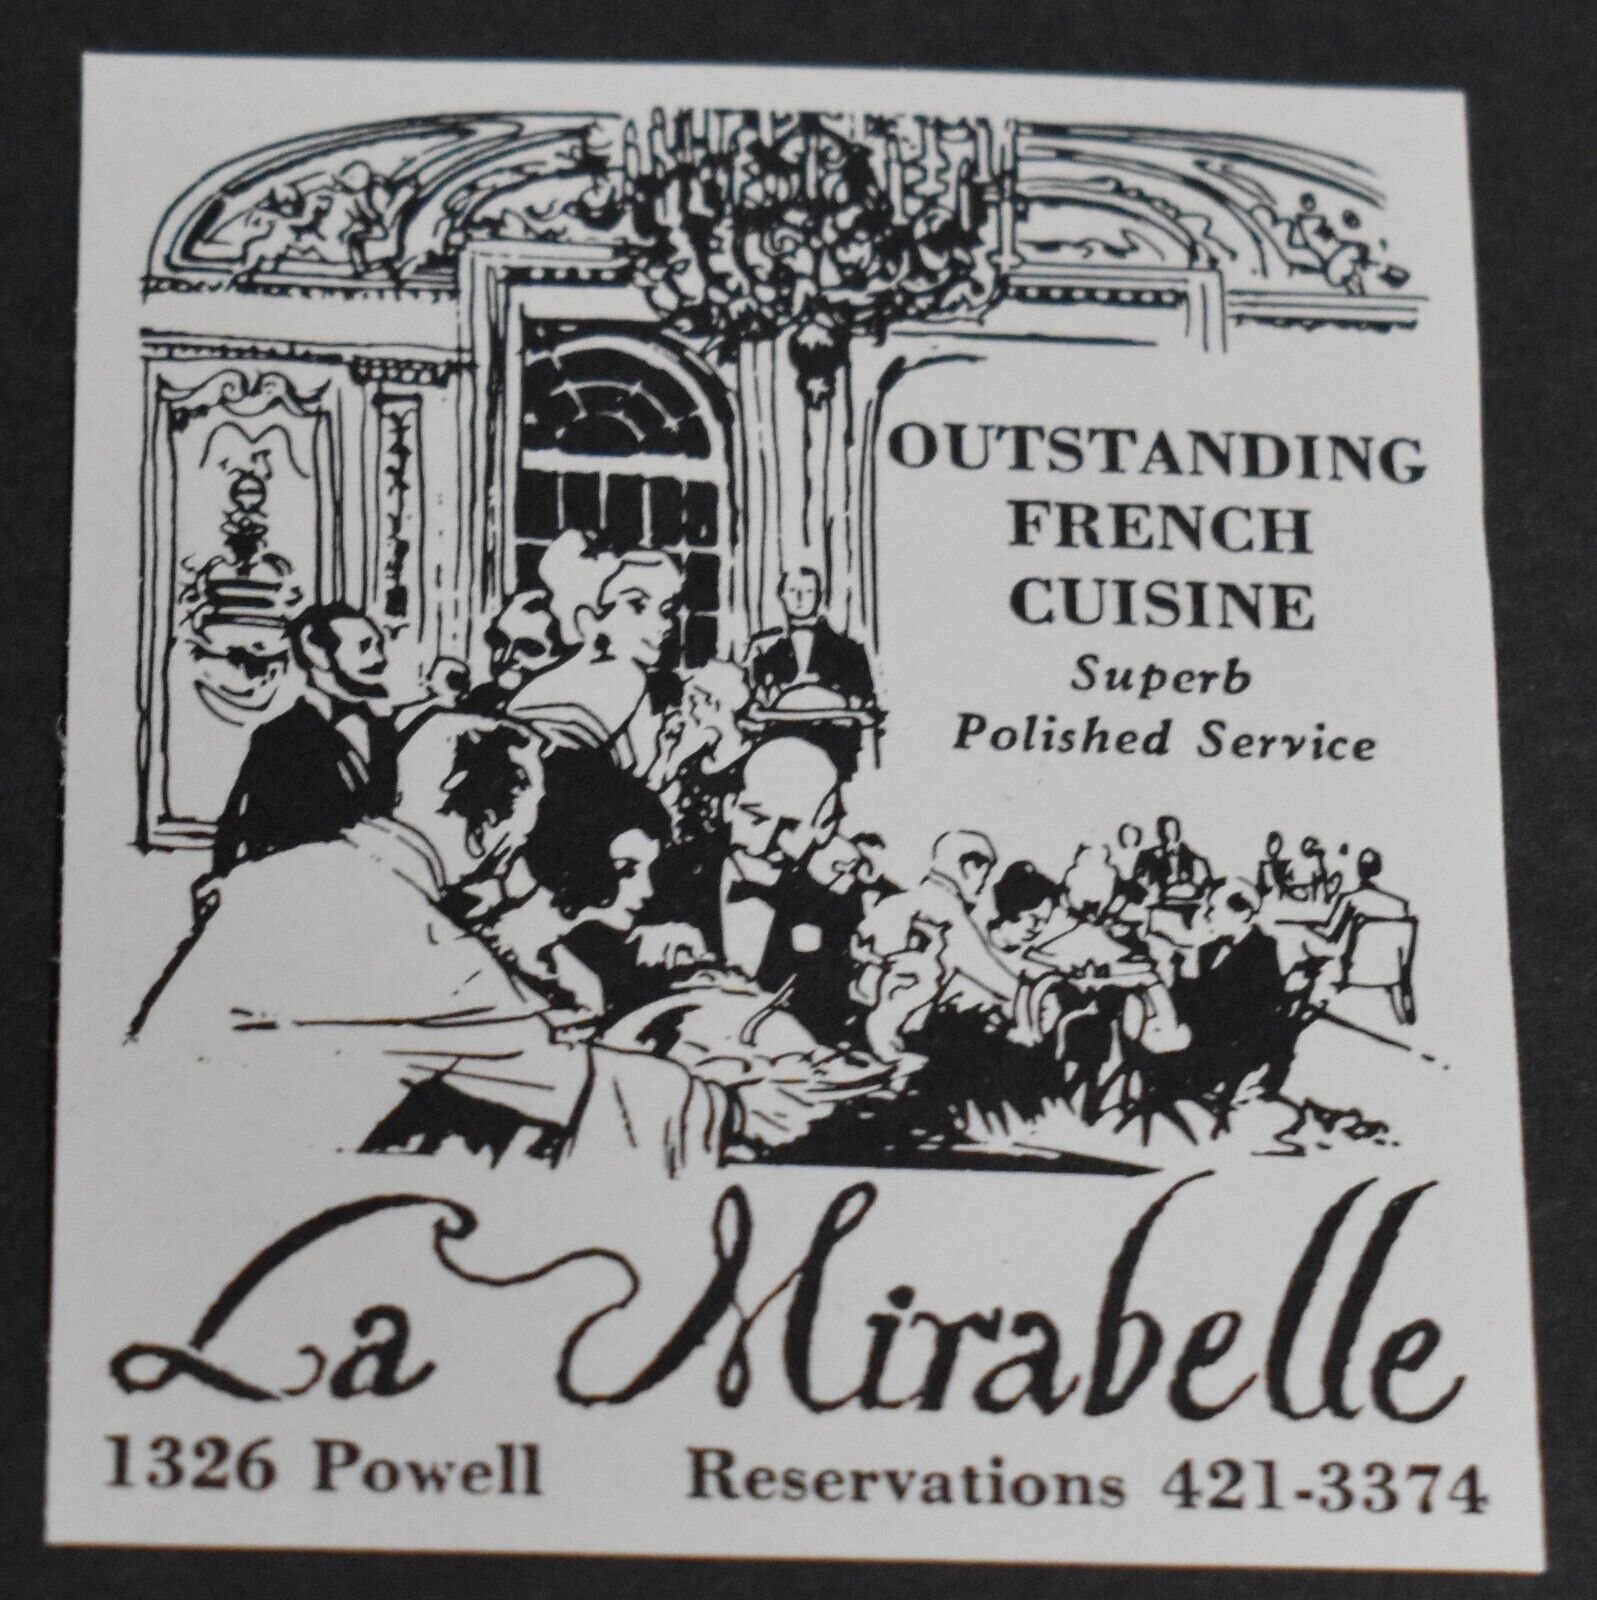 1969 Print Ad San Francisco La Mirabelle French Cuisine Restaurant 1326 Powell